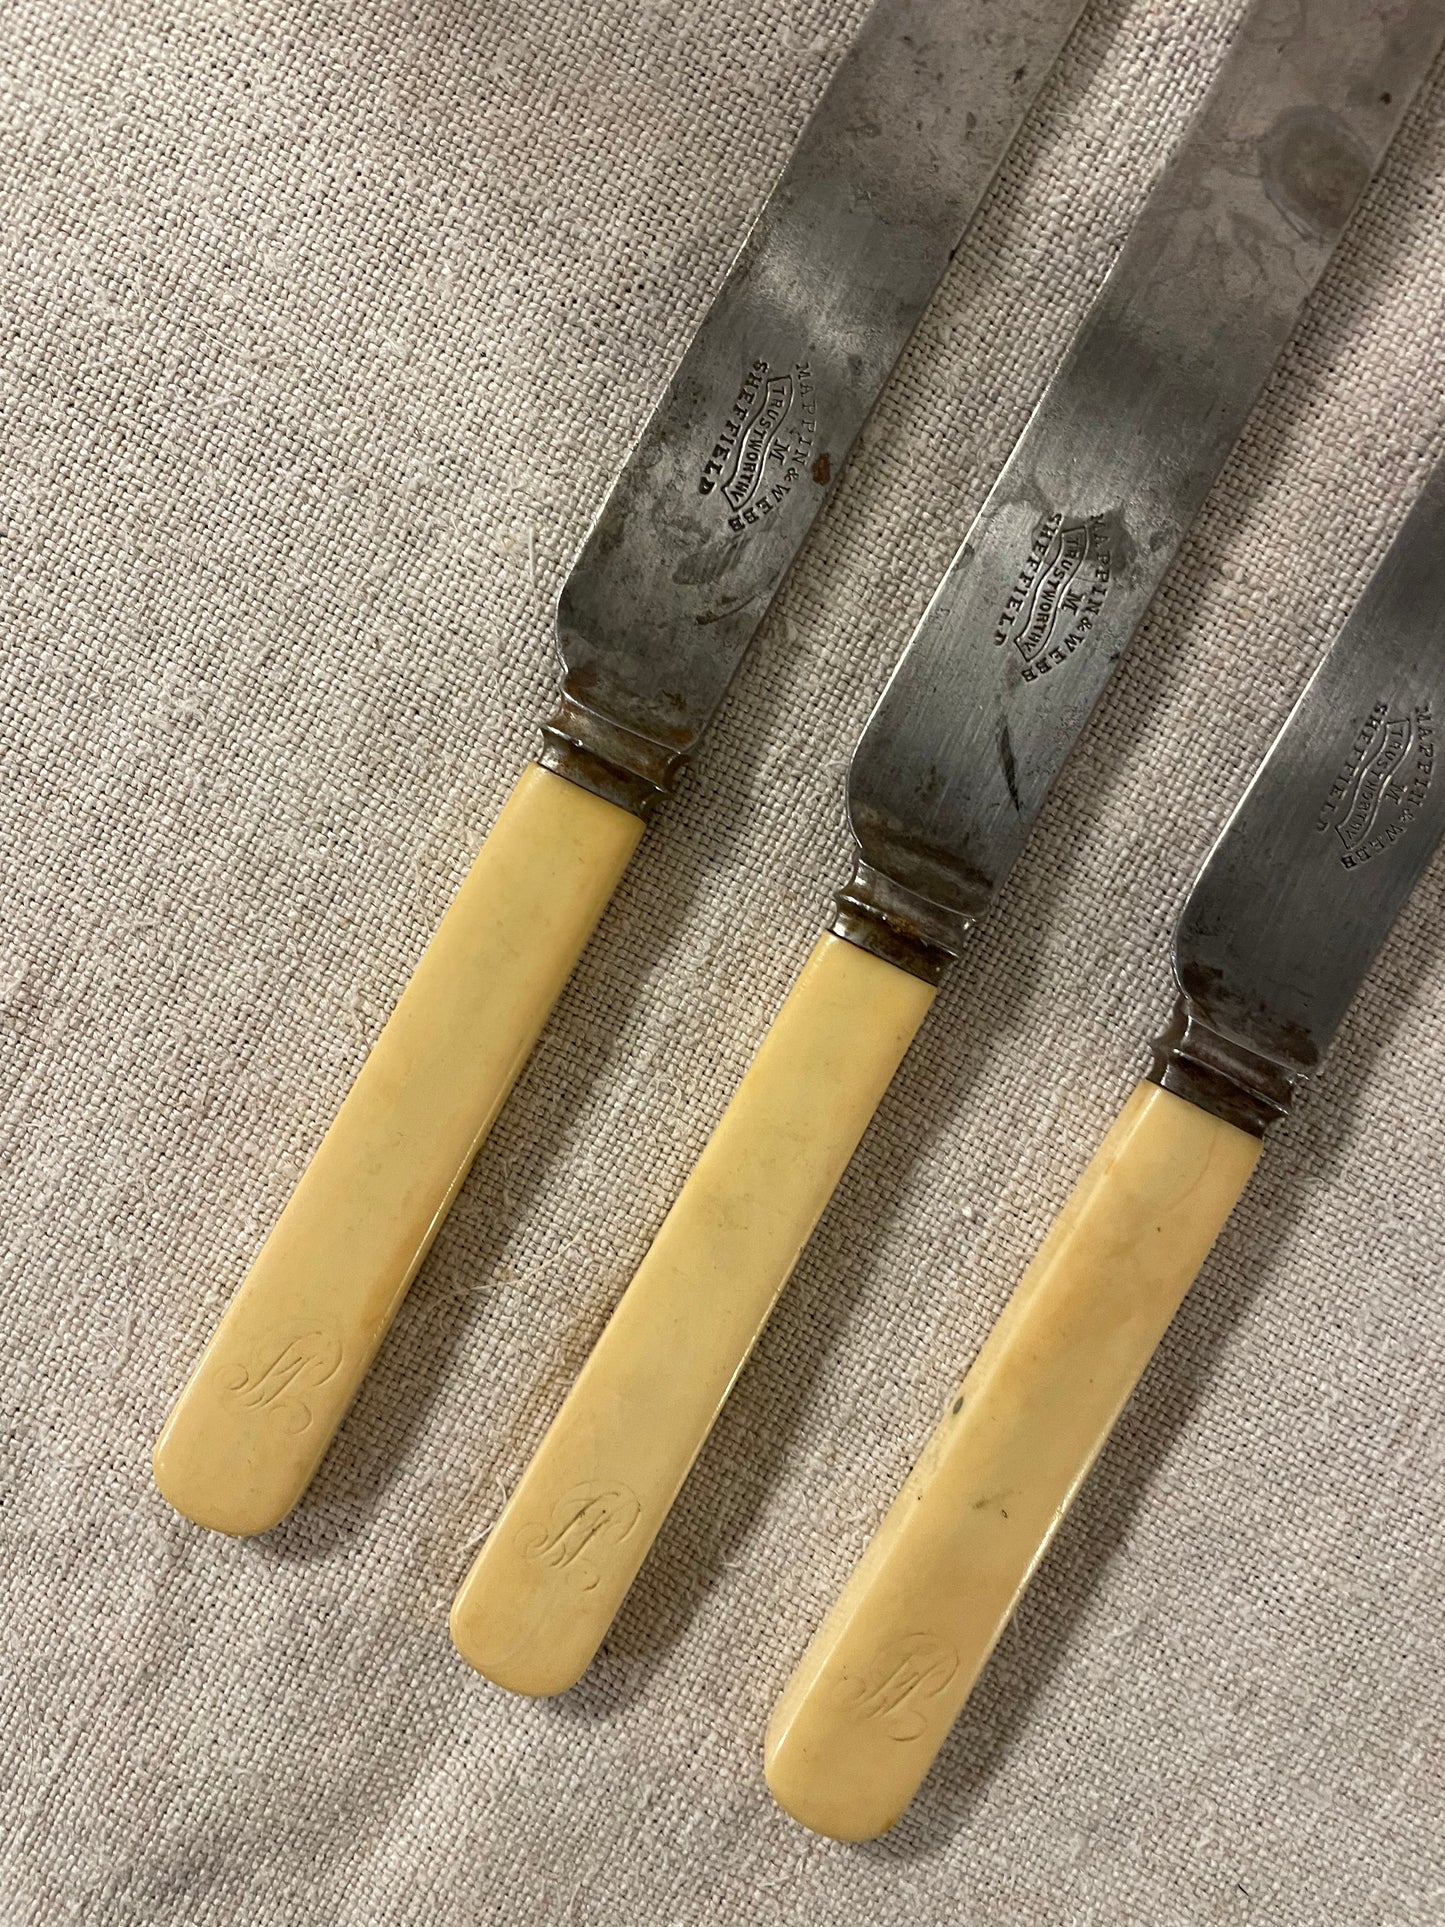 Cuchillos de pasta